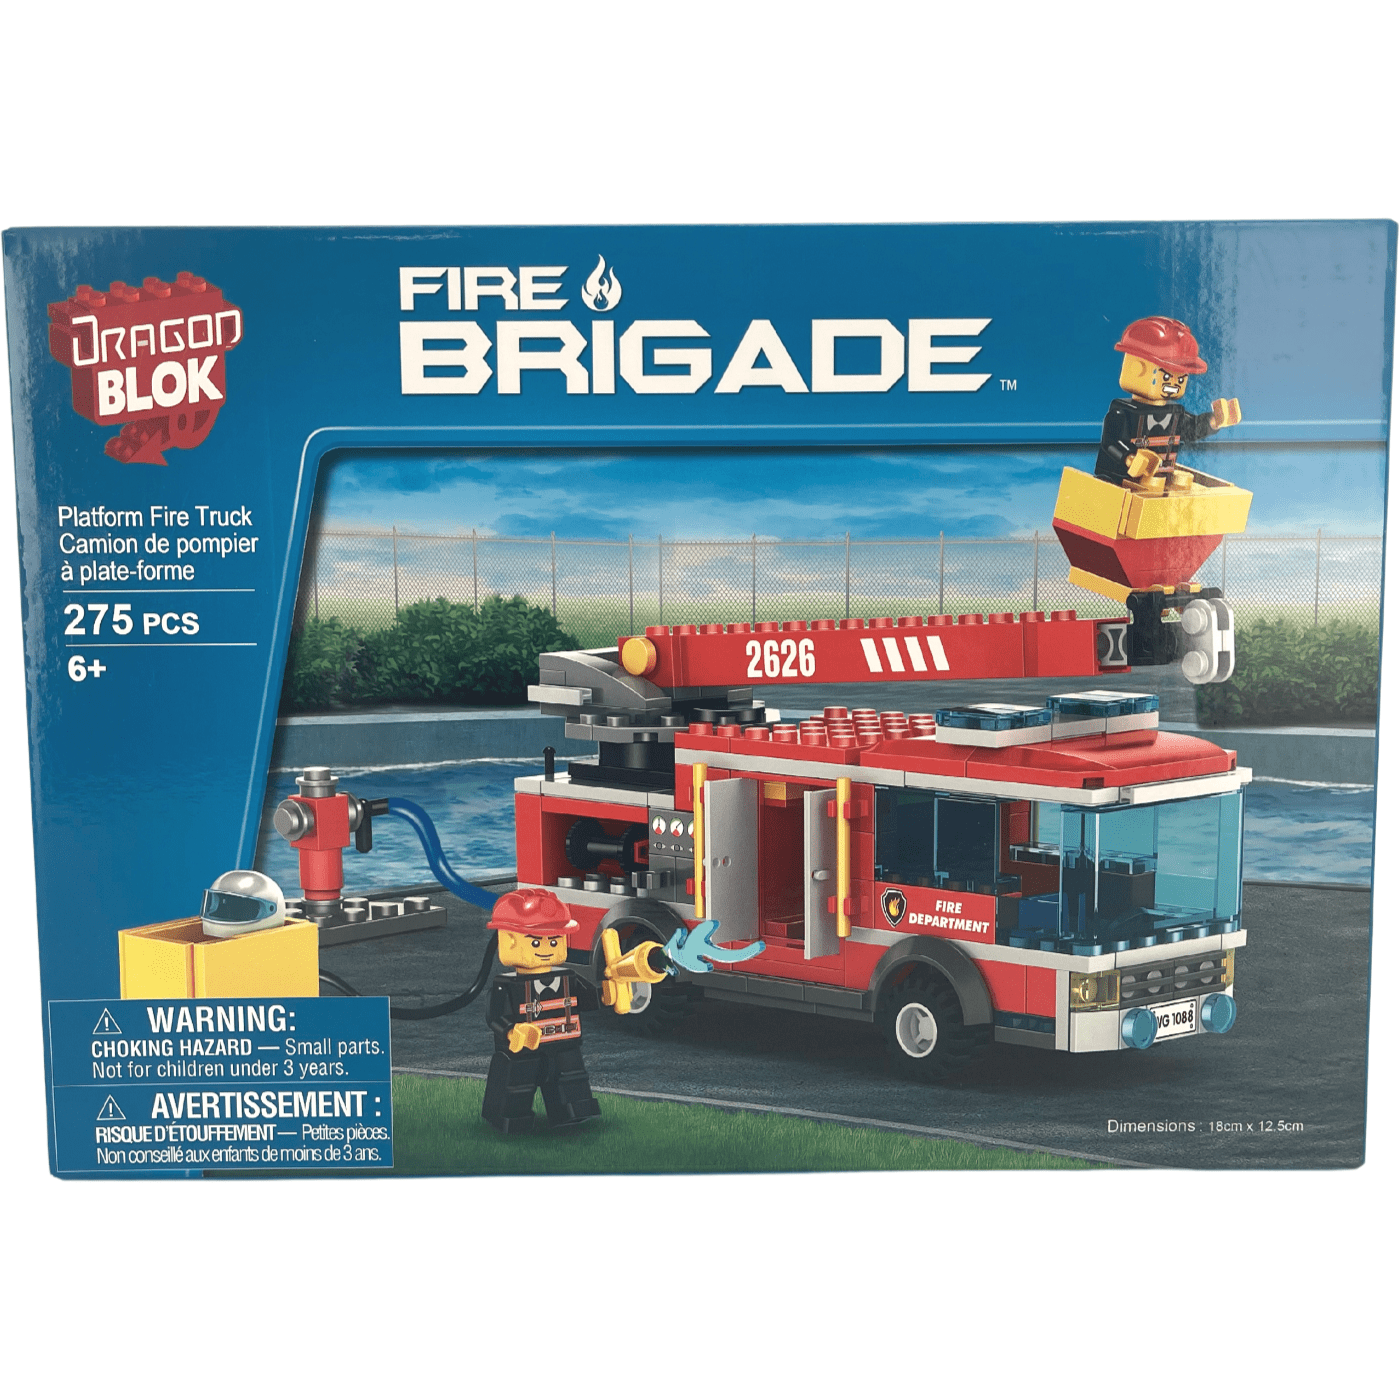 Dragon Blok Fire Brigade Building Set / Platform Fire Truck / 275 Pieces